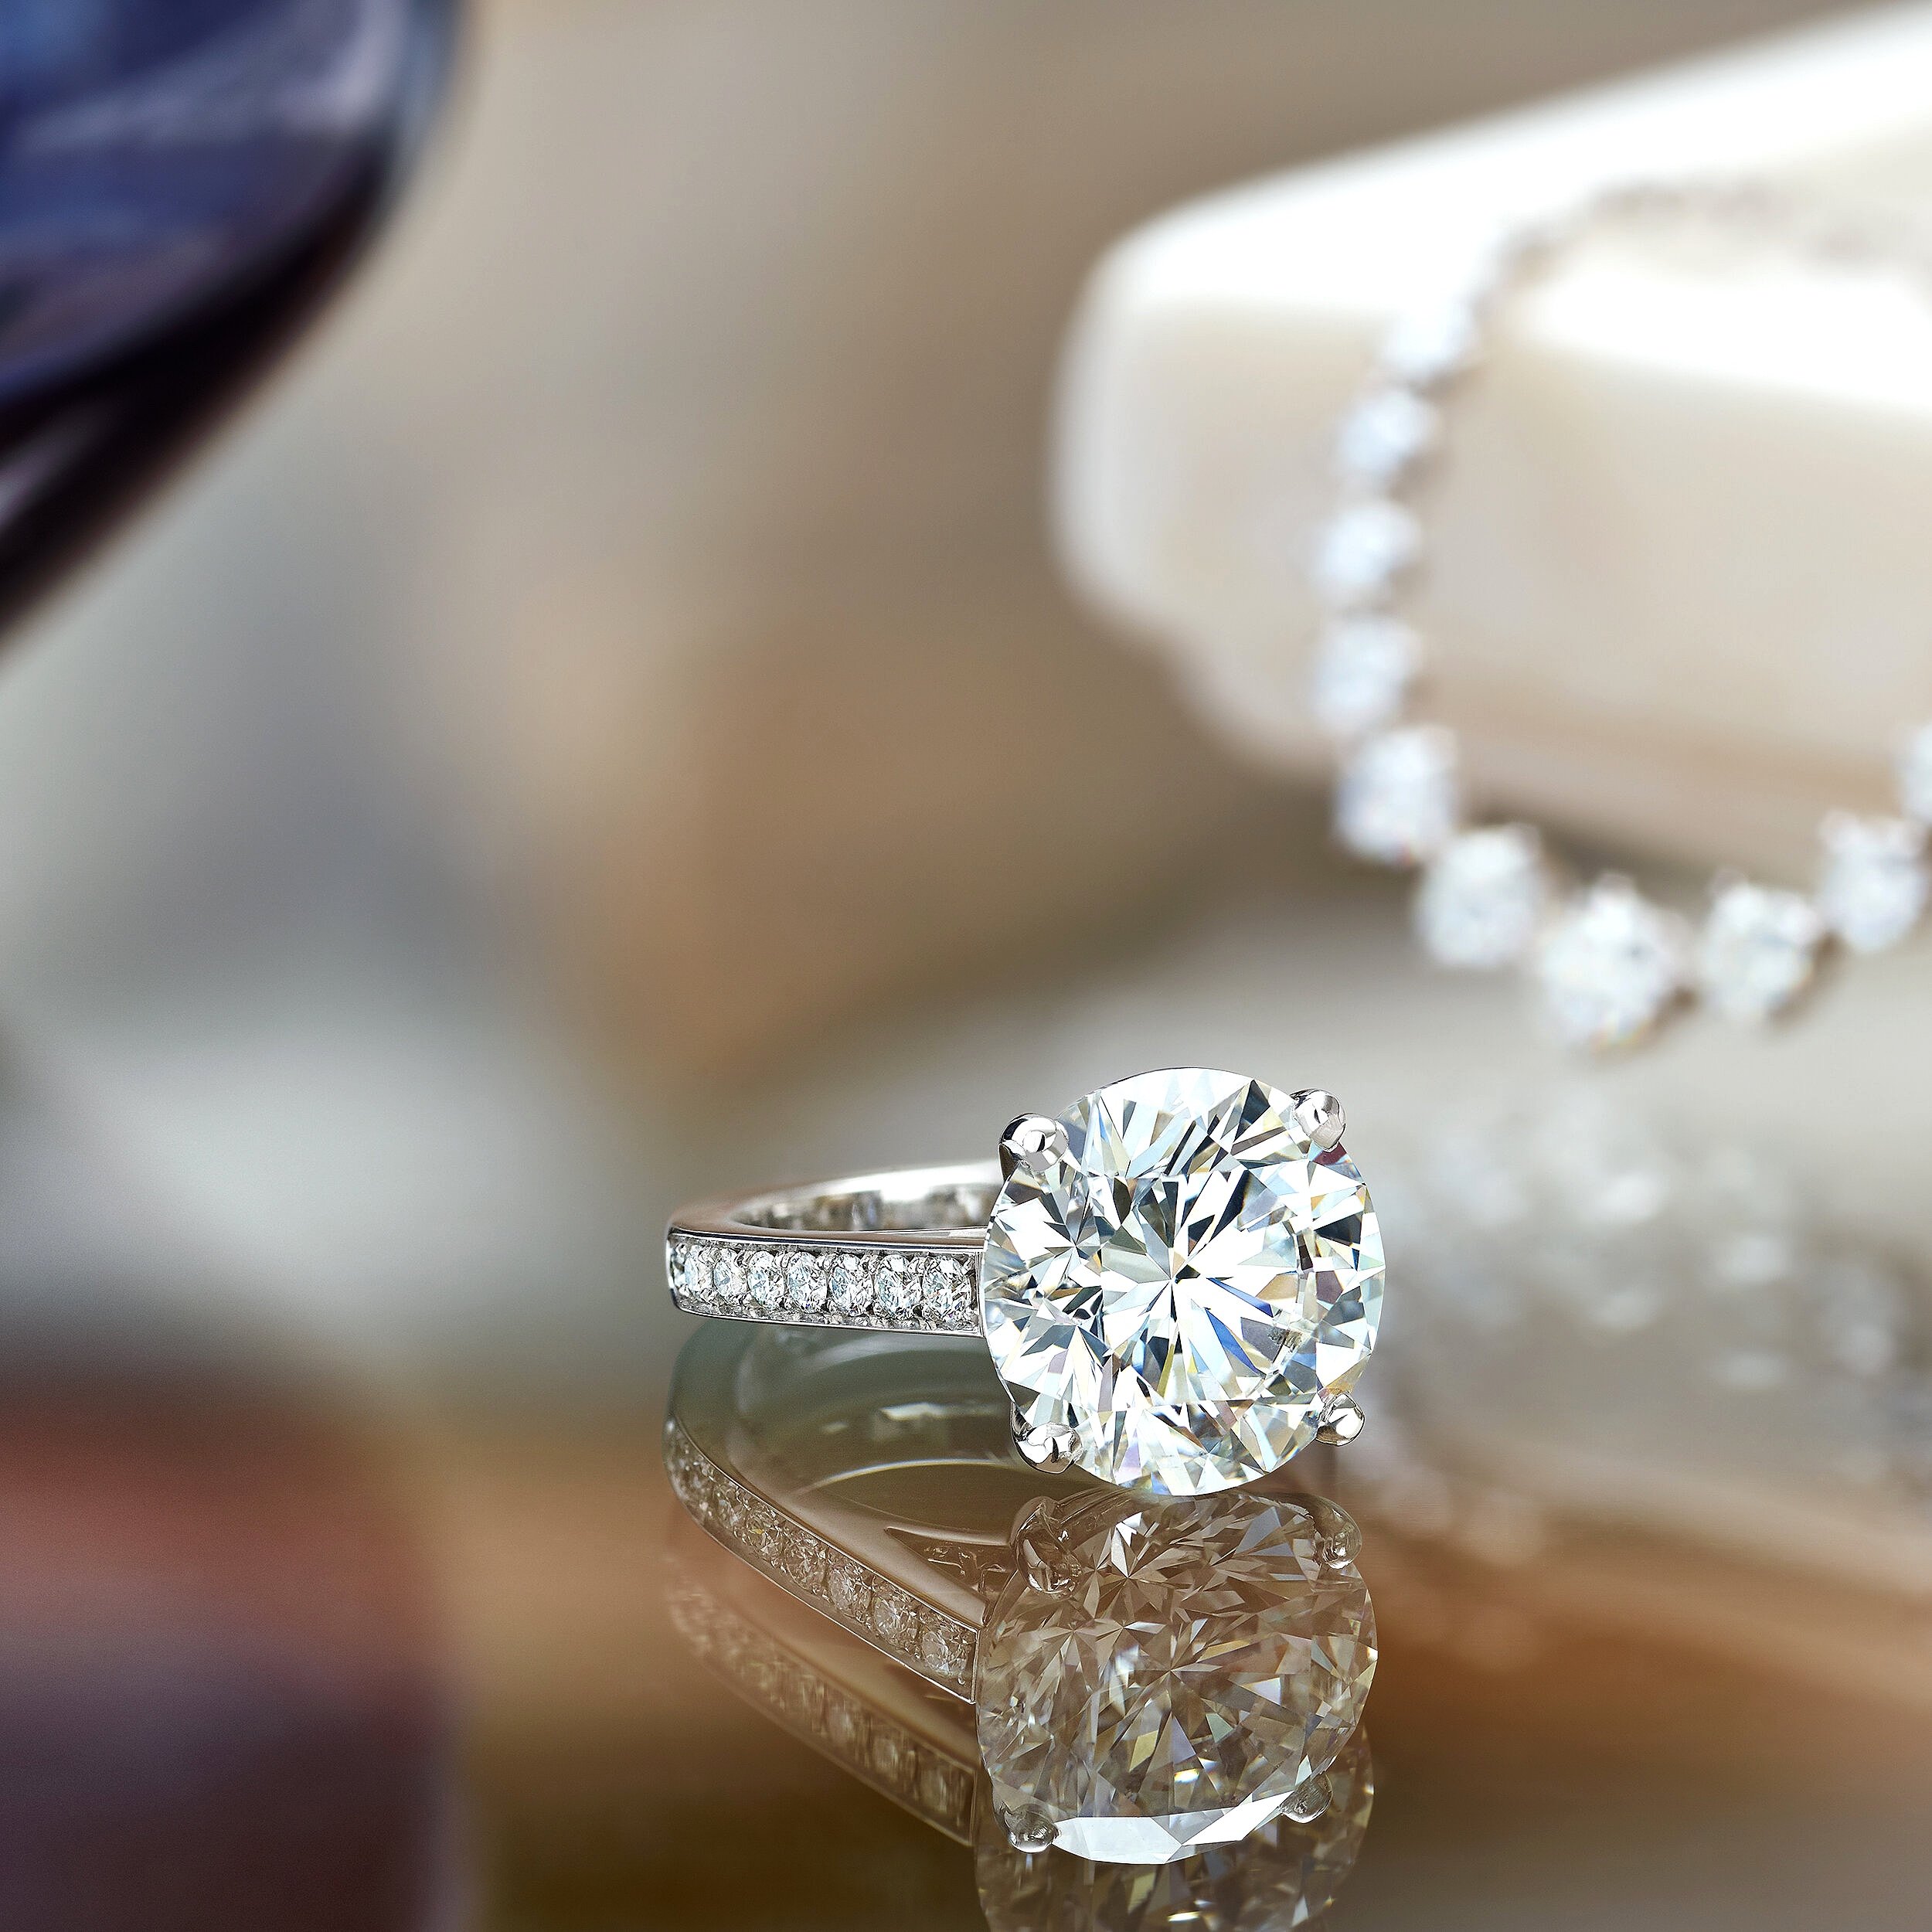  Diamond ring shot on location for De Beers Diamond Jewellers 